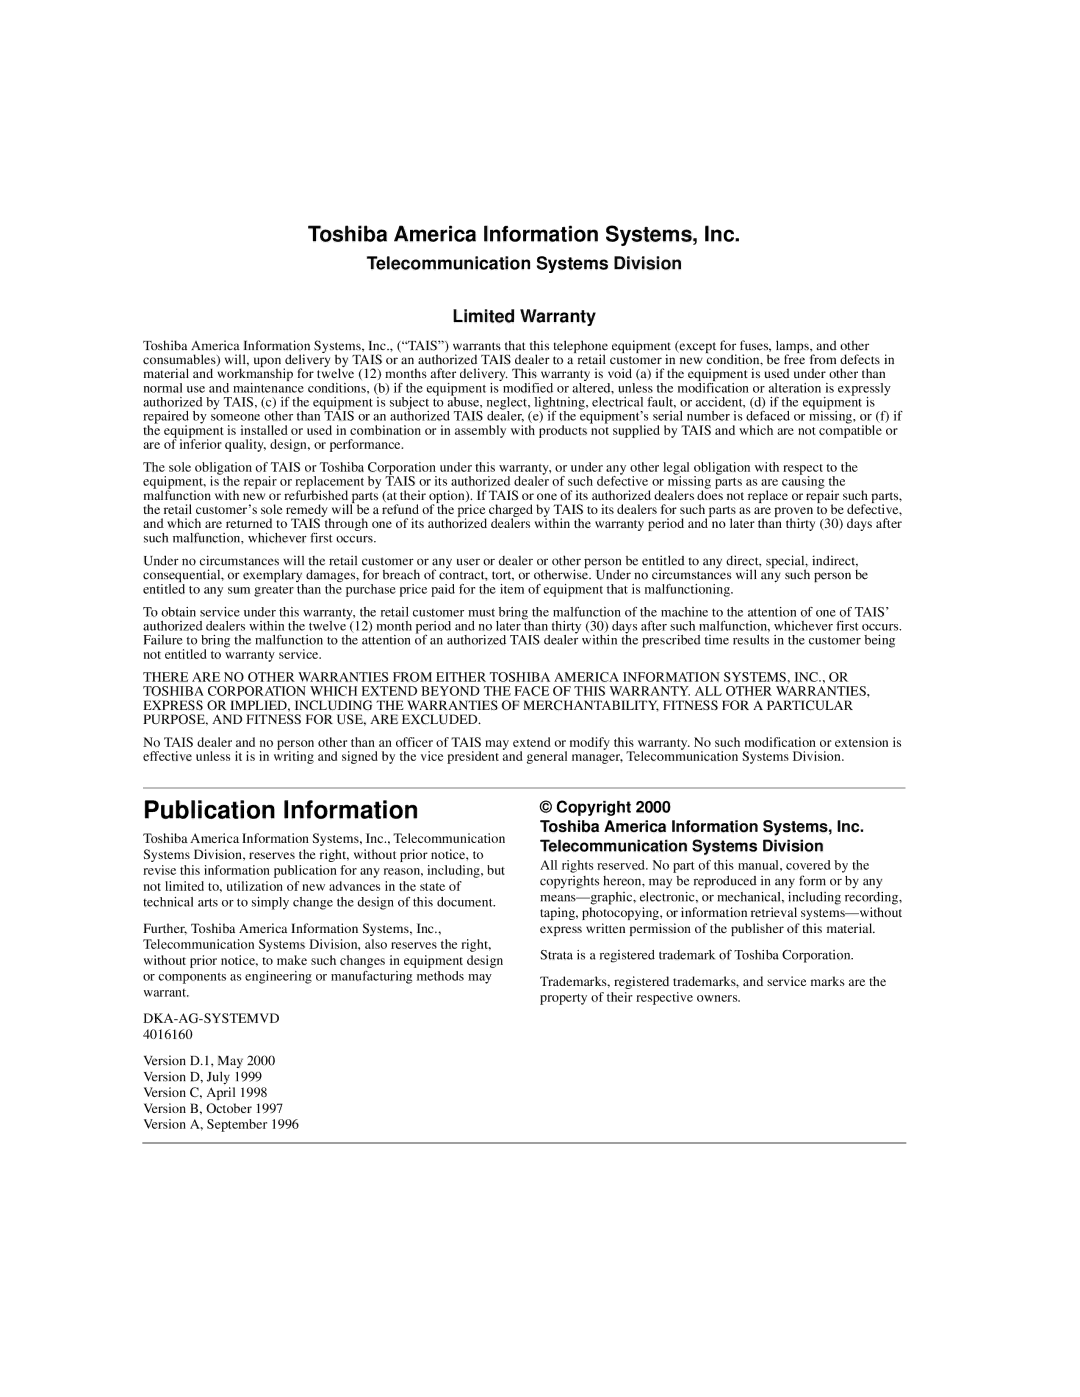 Toshiba DKA-AG-SYSTEMVD manual Publication Information 